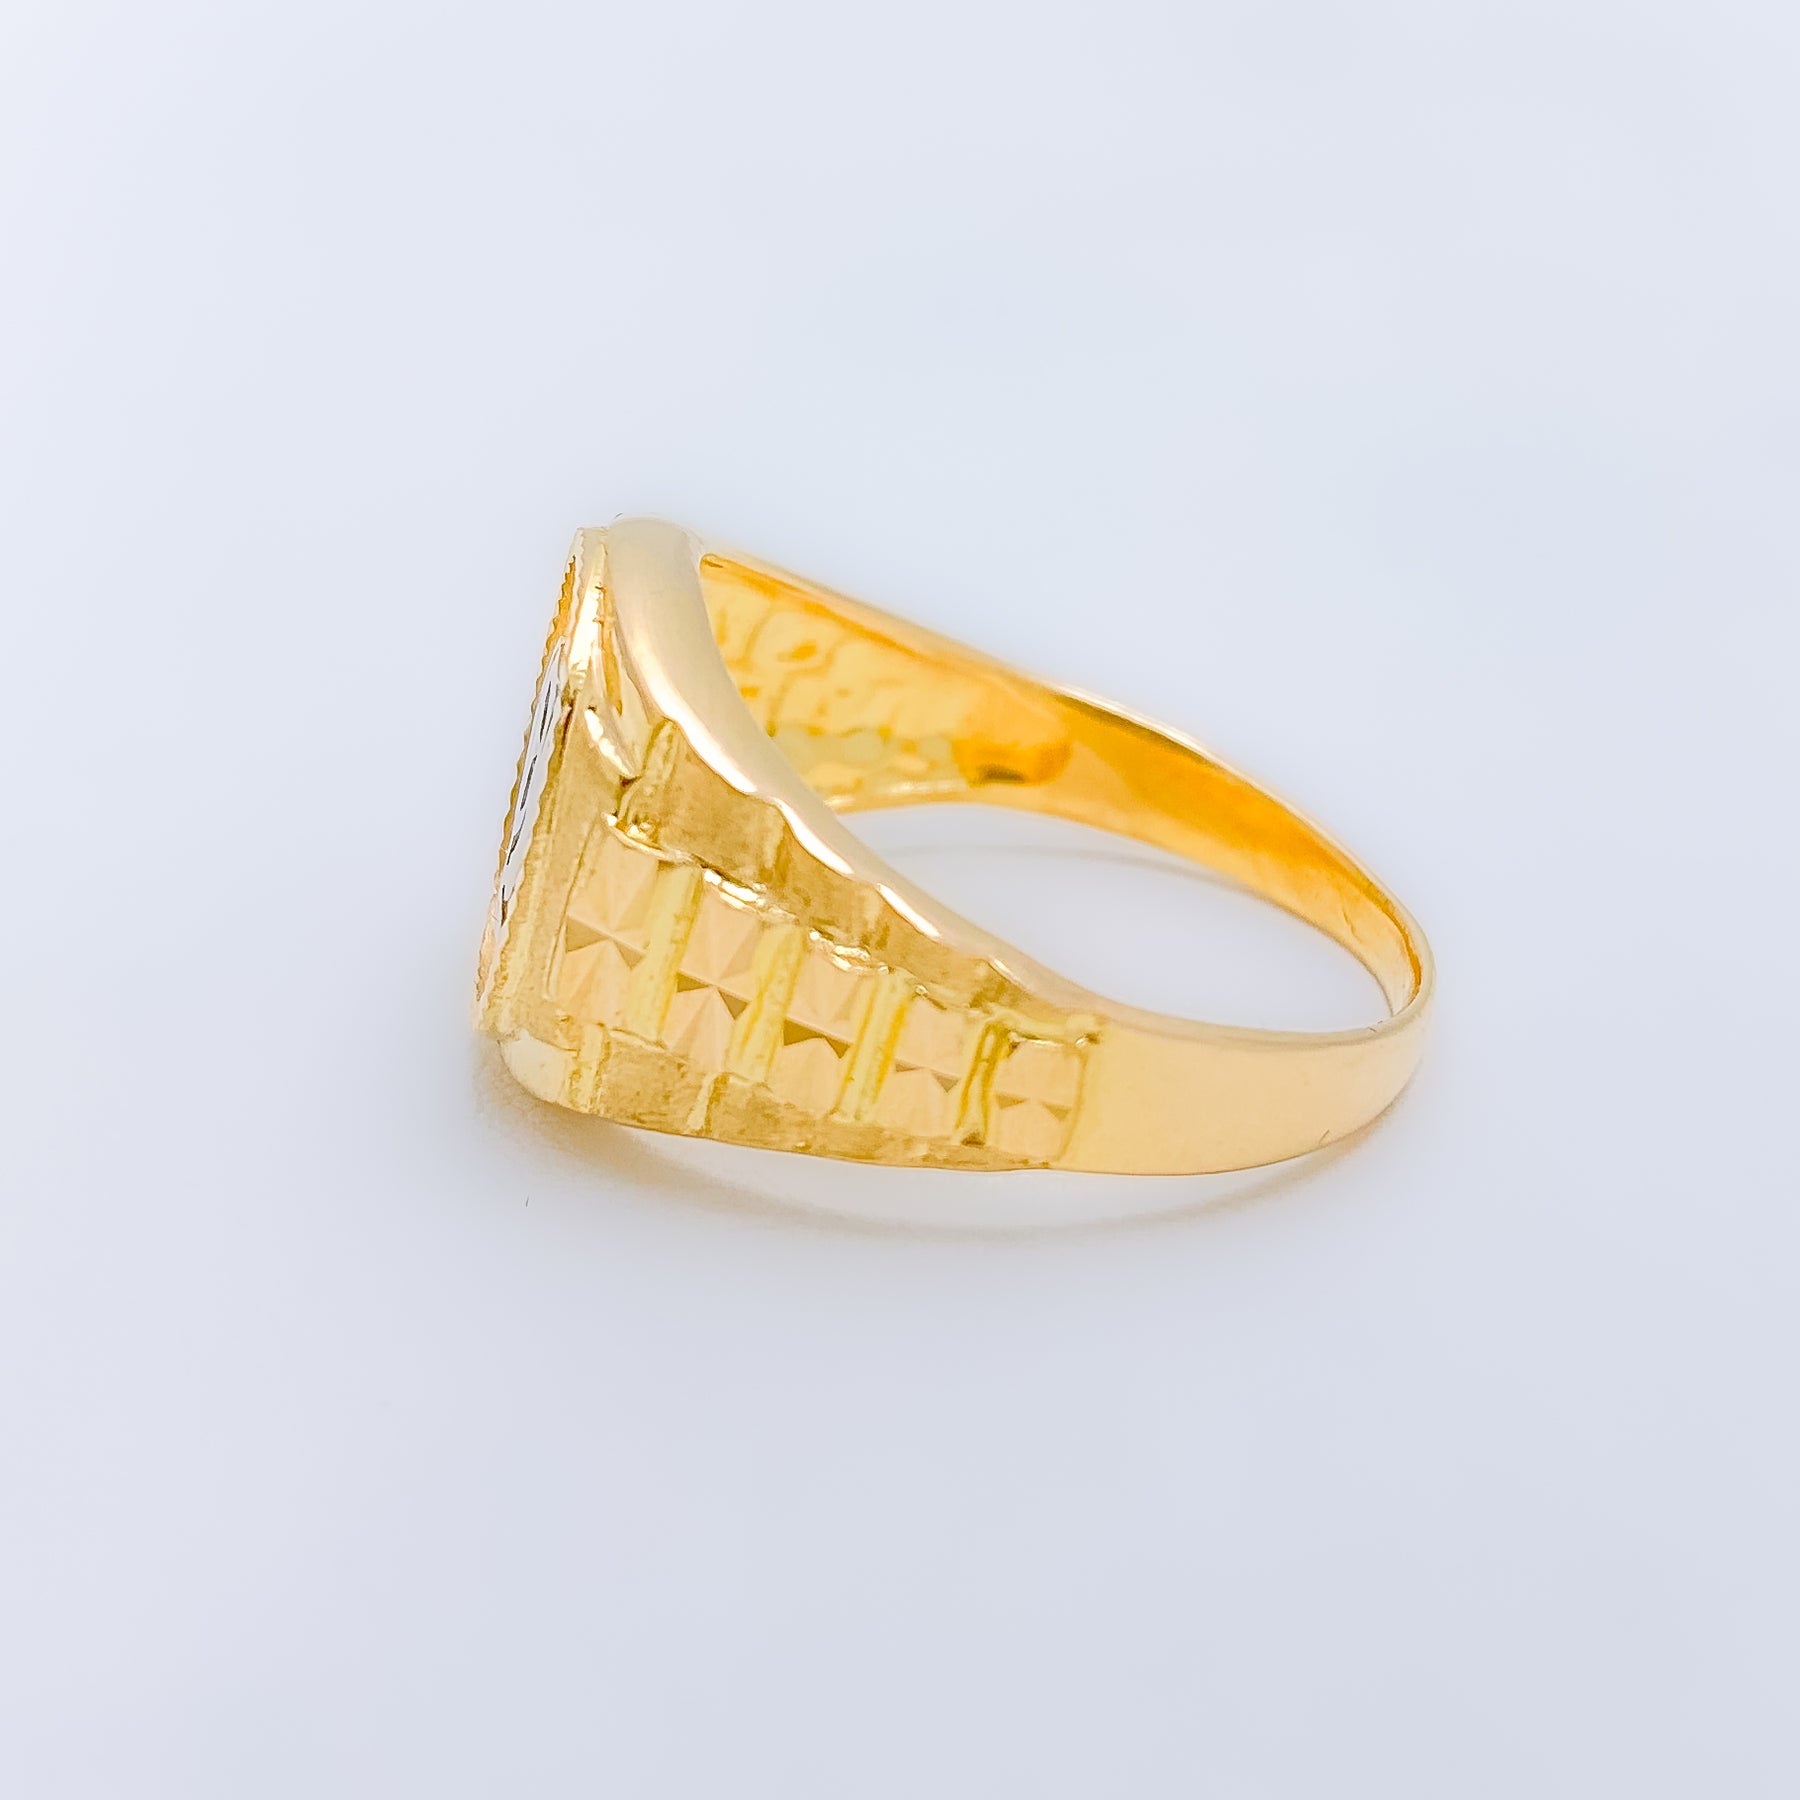 Religious Khanda Ring (22Kt) - RiMs11100 - 22k yellow gold mens ring  designed beautifully with holy khanda sign on it. Sandy frost finishe